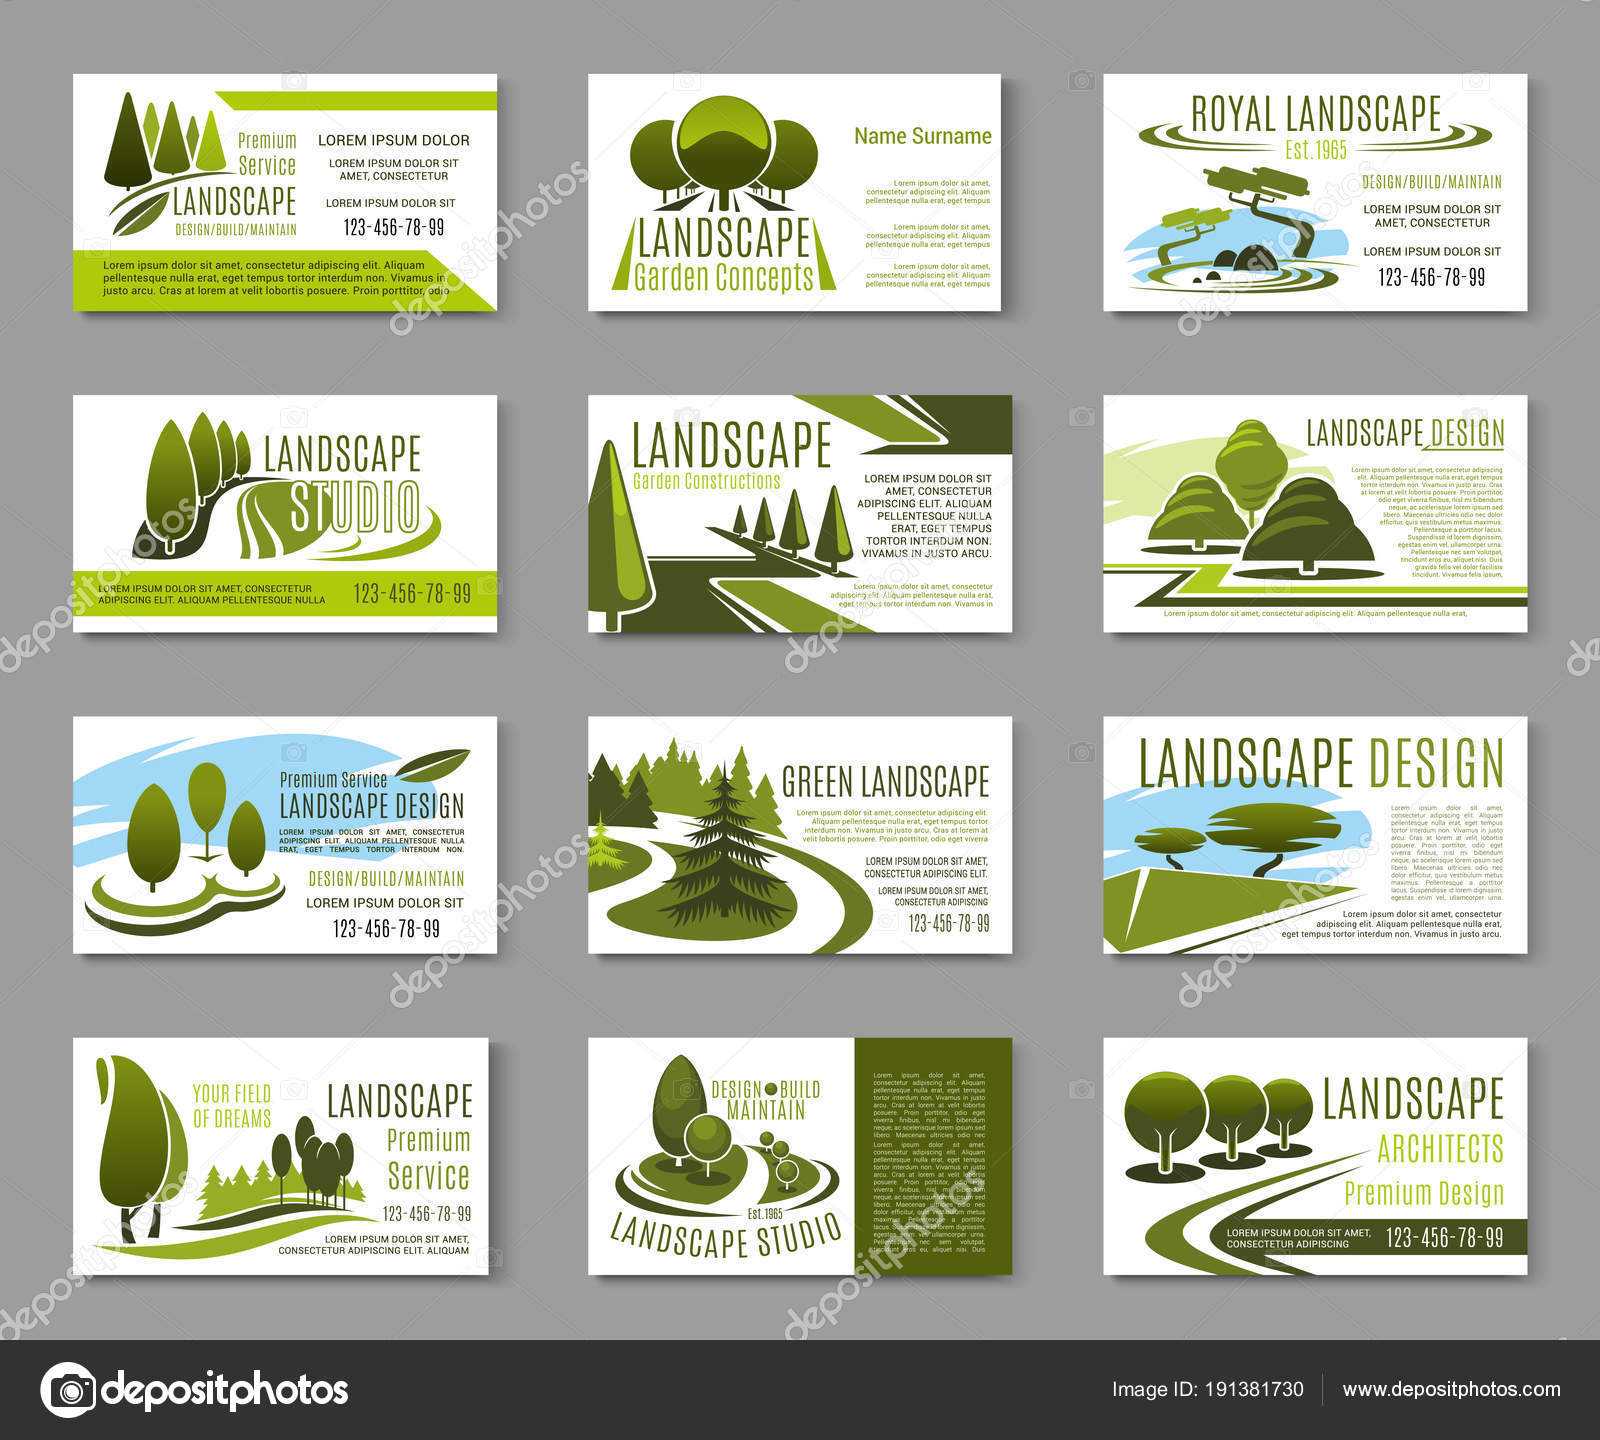 Landscape Design Business Cards | Landscape Design Studio With Gardening Business Cards Templates